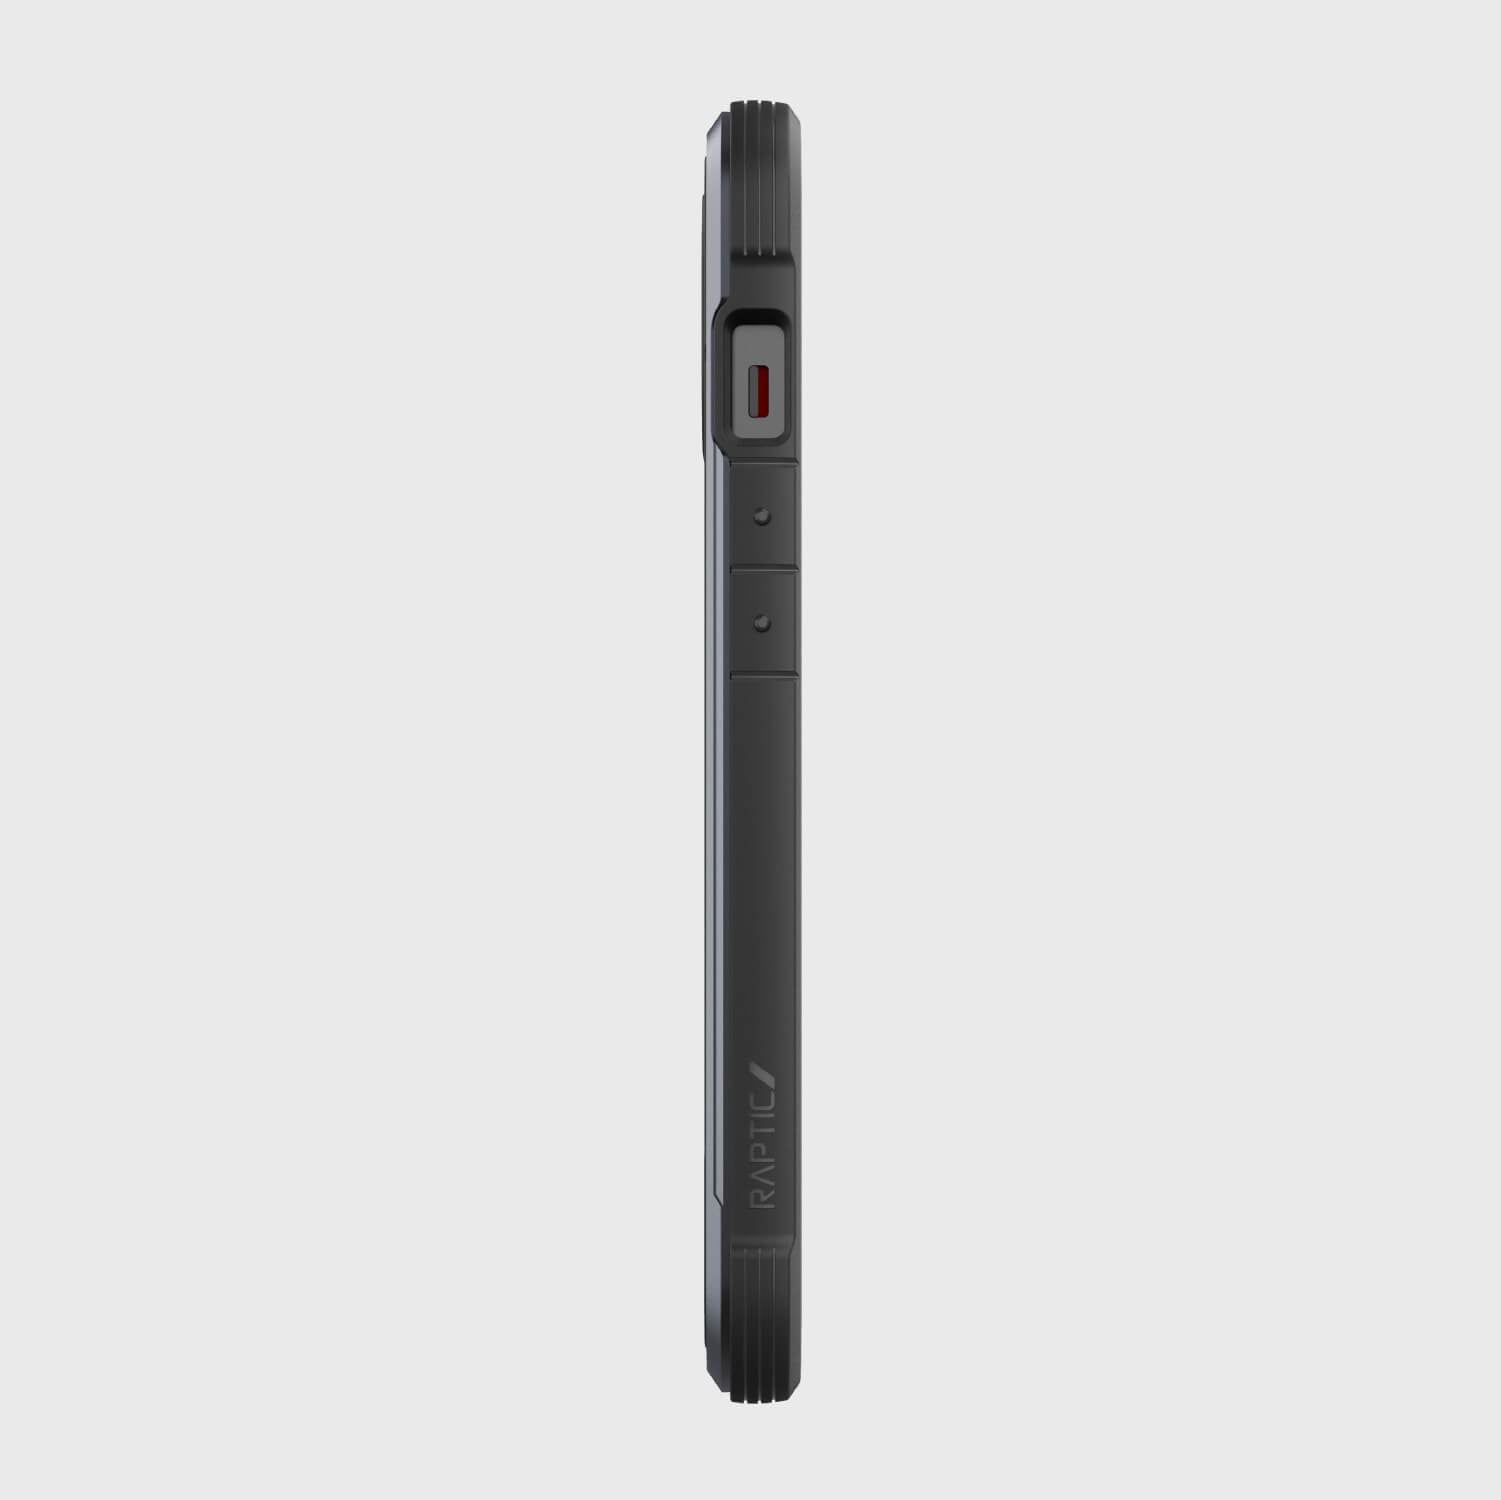 X-Doria Raptic Shield Pro for iPhone 13 Series